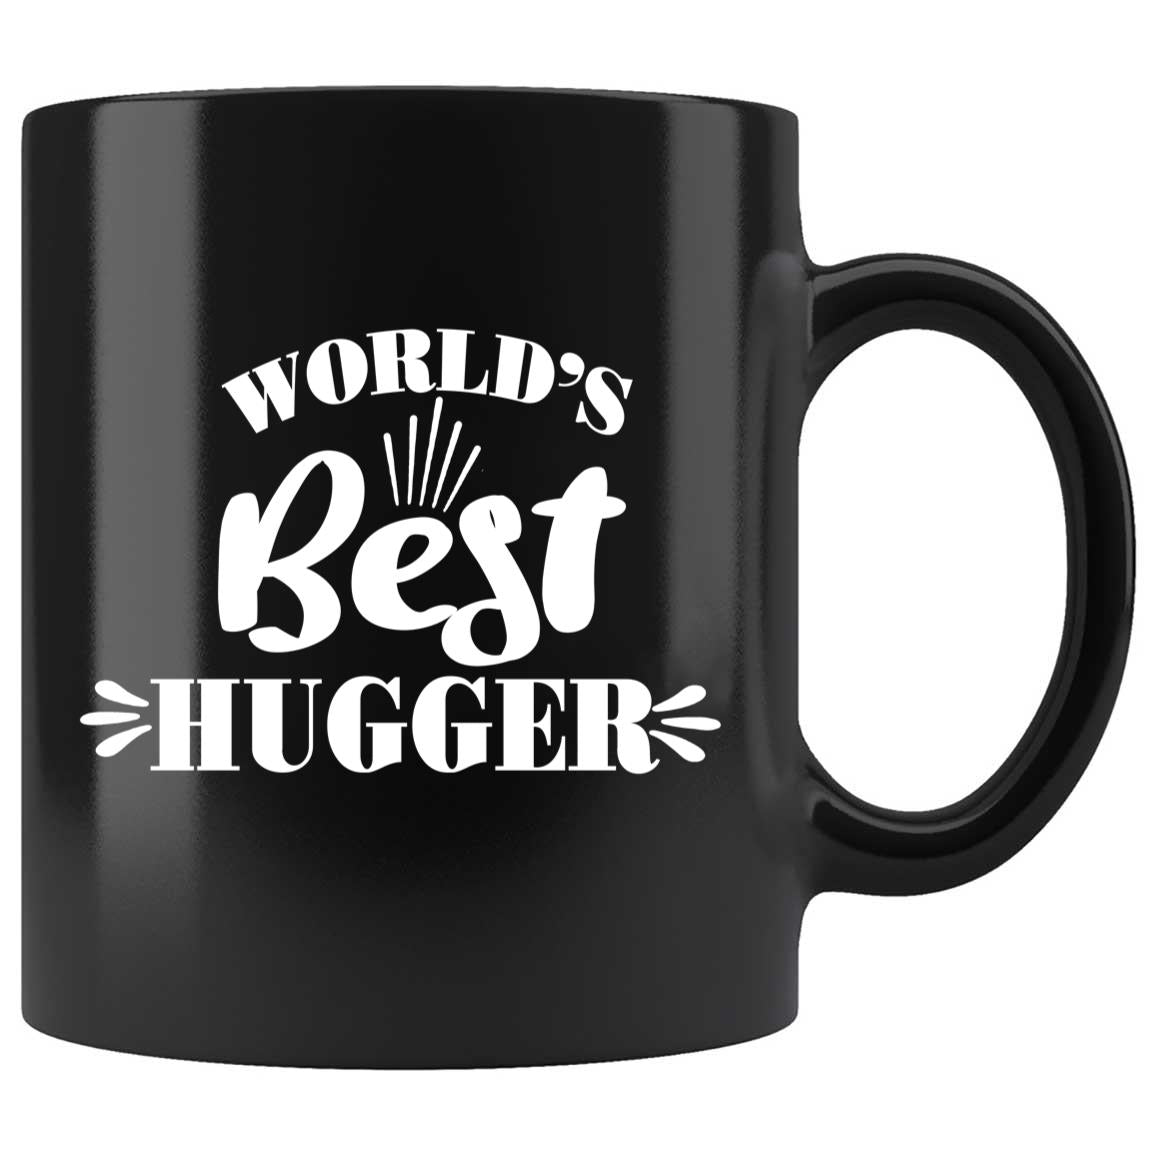 Skitongifts Coffee Mug Funny Ceramic Novelty World's Best Hugger dBybVb7